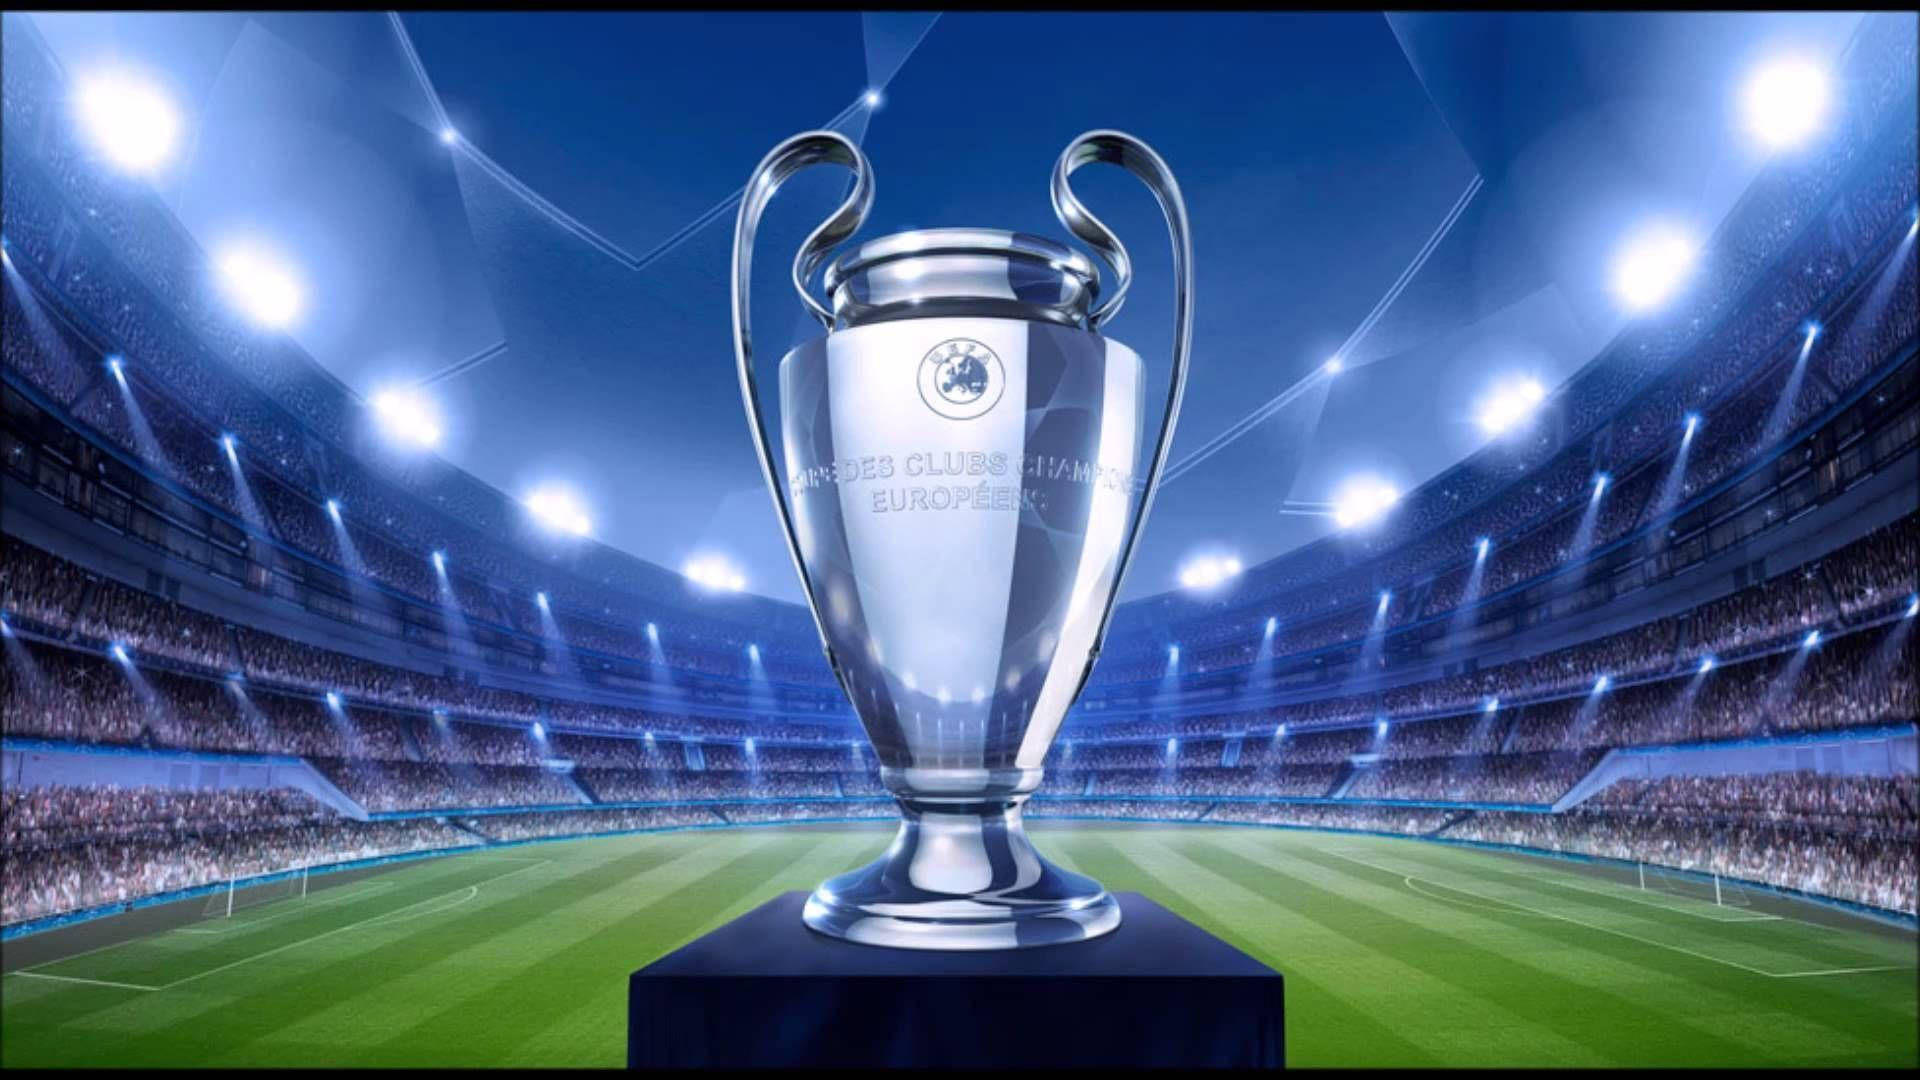 The prestigious UEFA Champions League Trophy Wallpaper